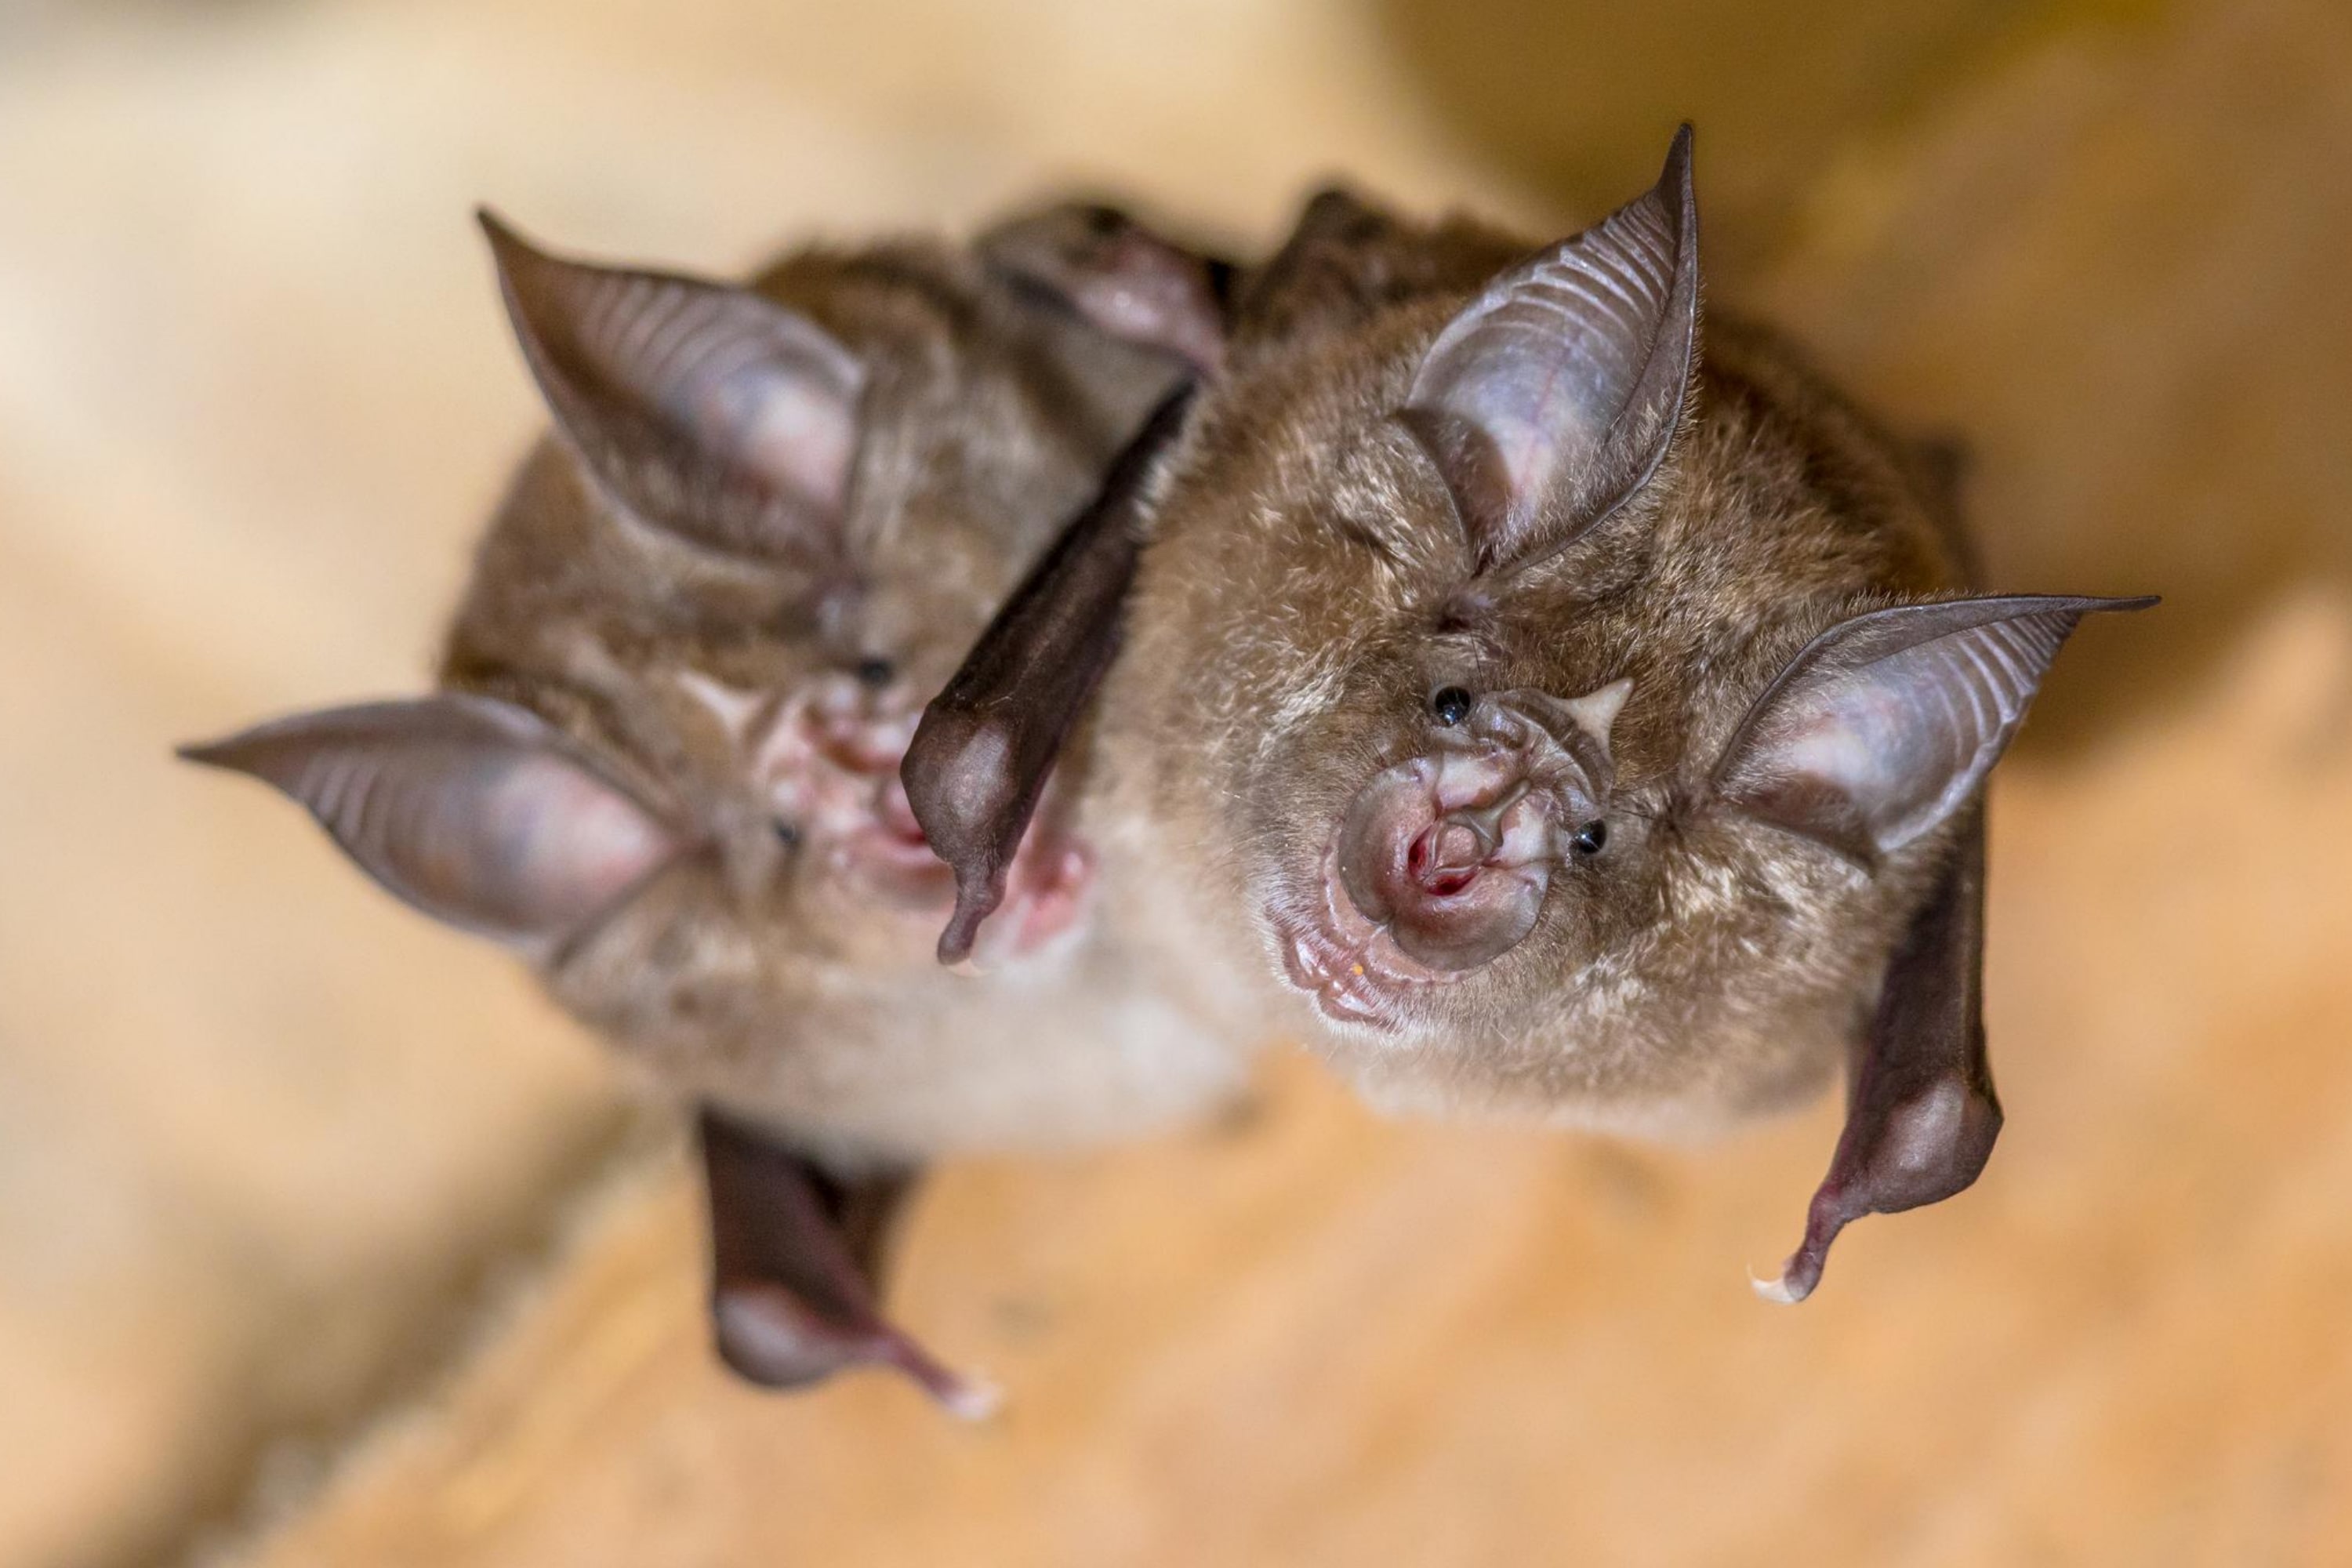 Bats Transmit Parasites